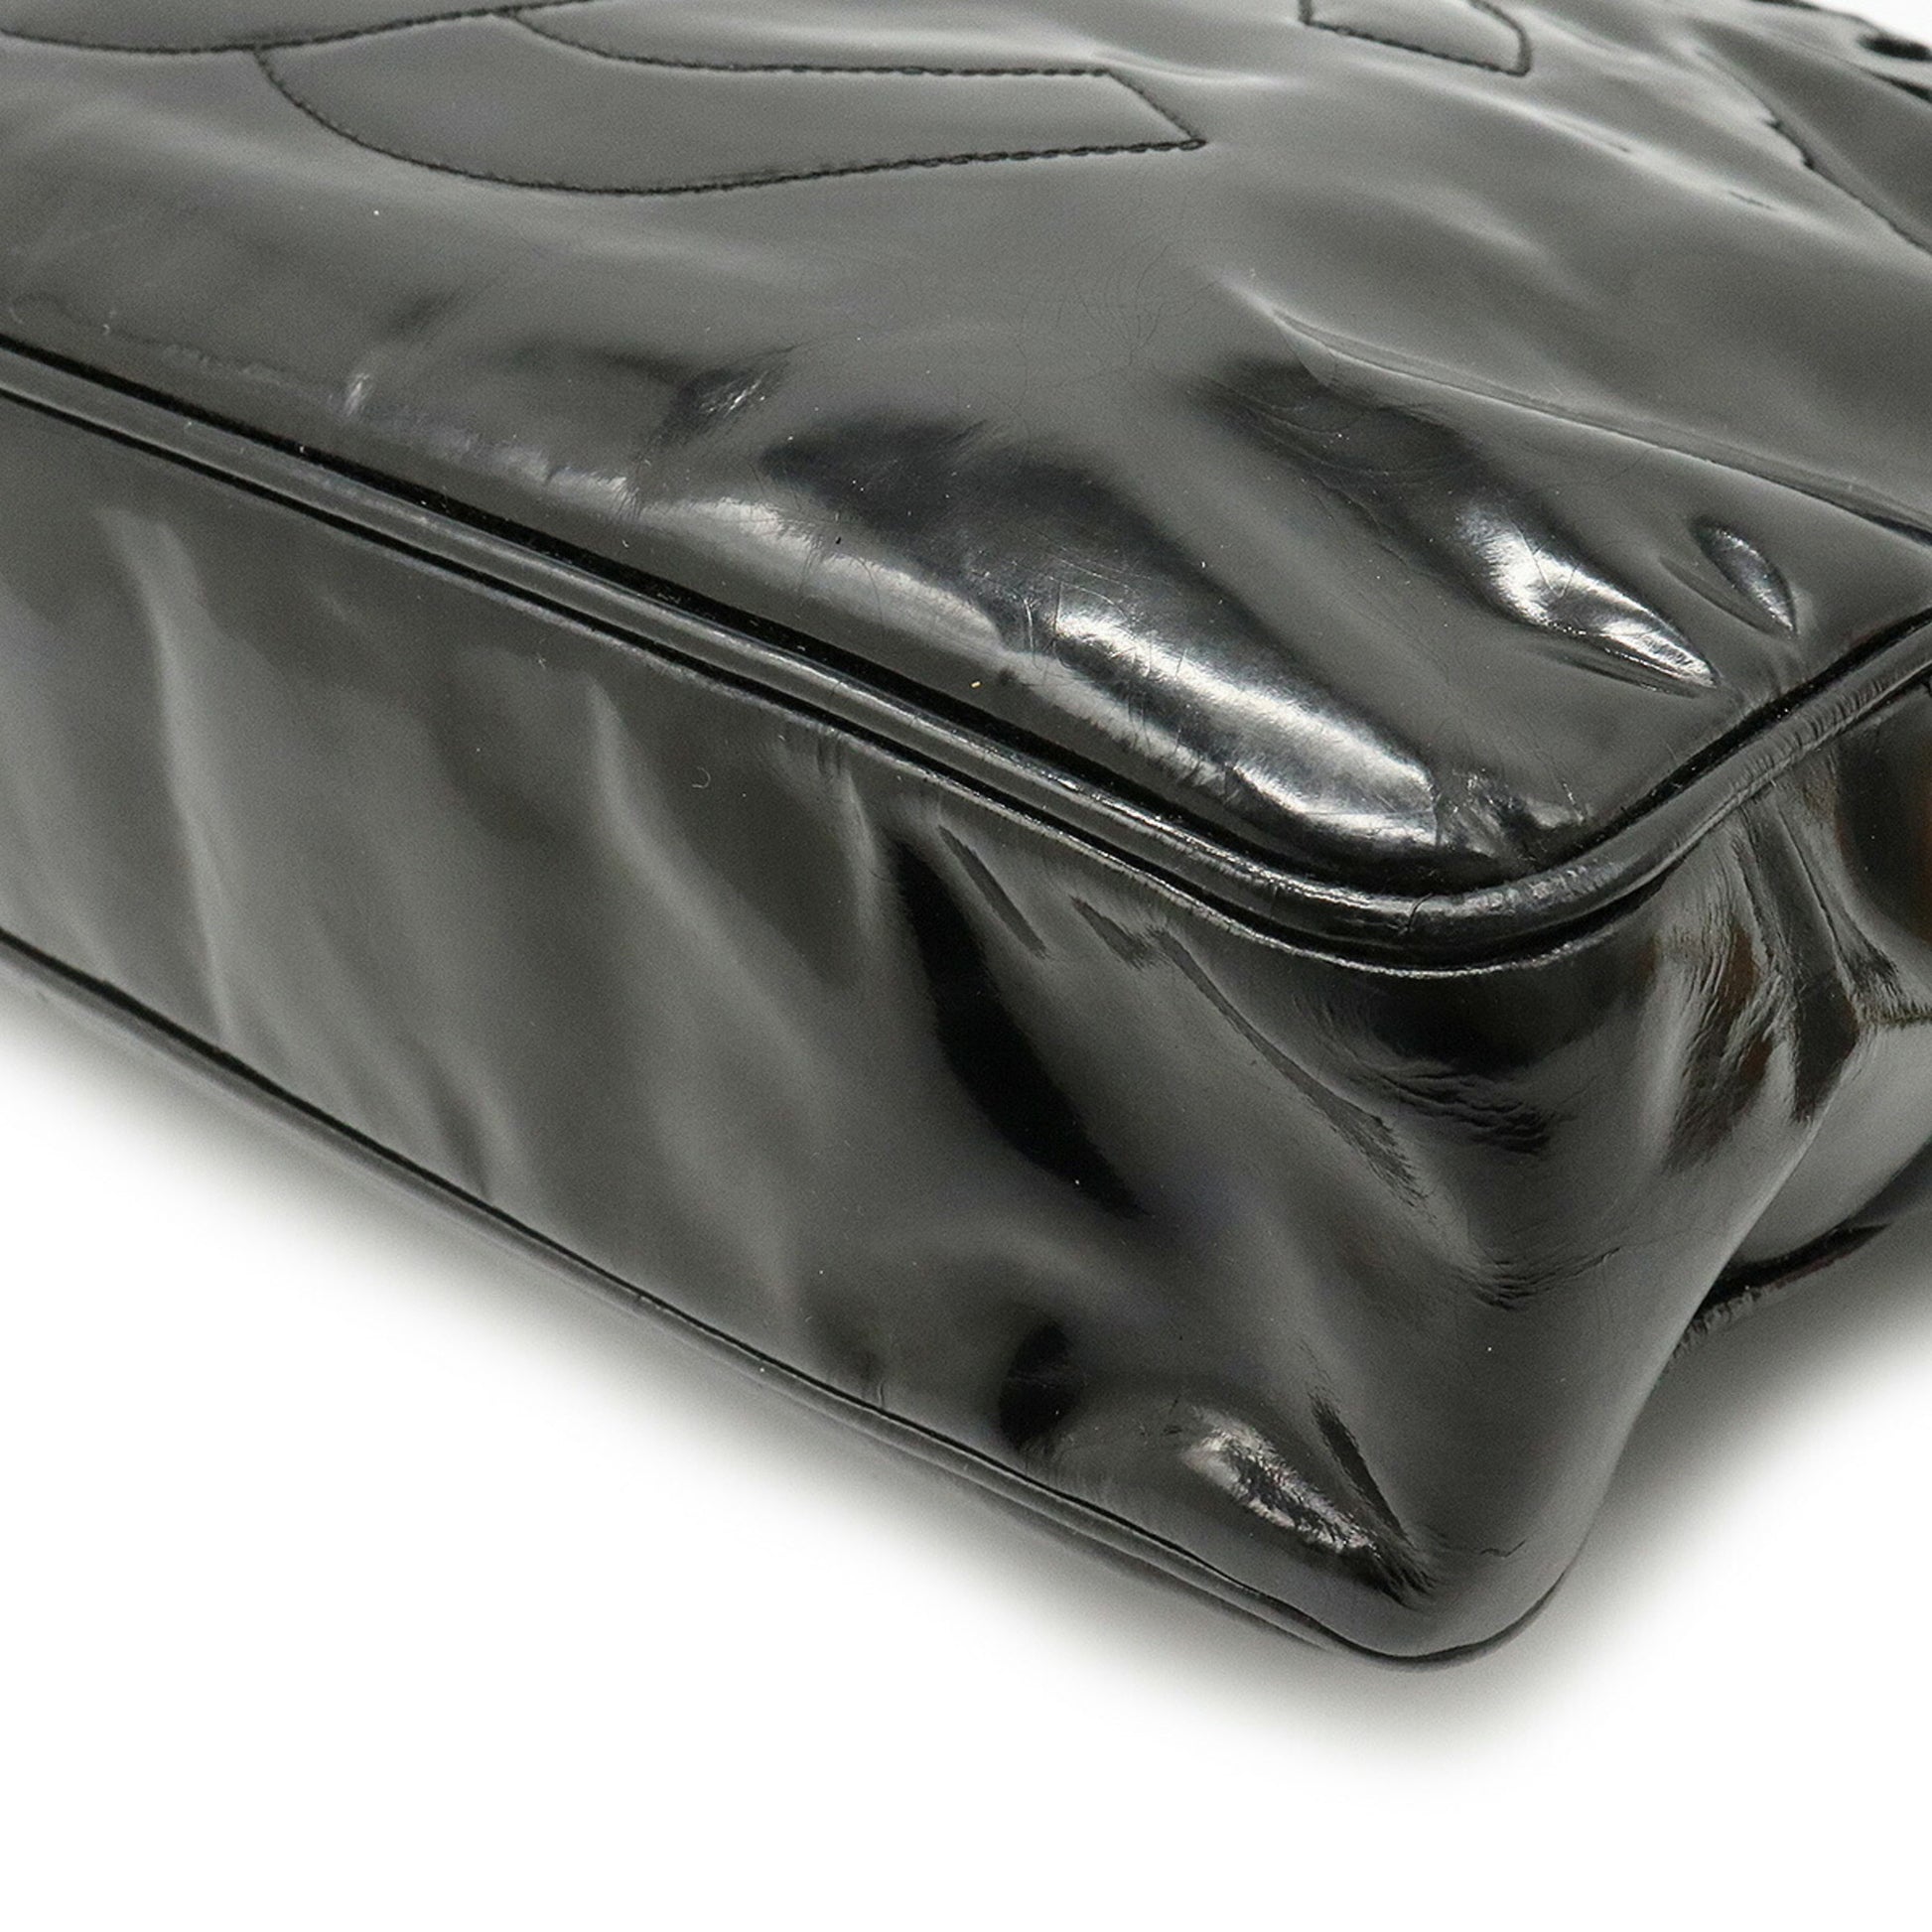 Chanel Here Mark Chain Shoulder Bag Tote Enamel Patent Leather Black